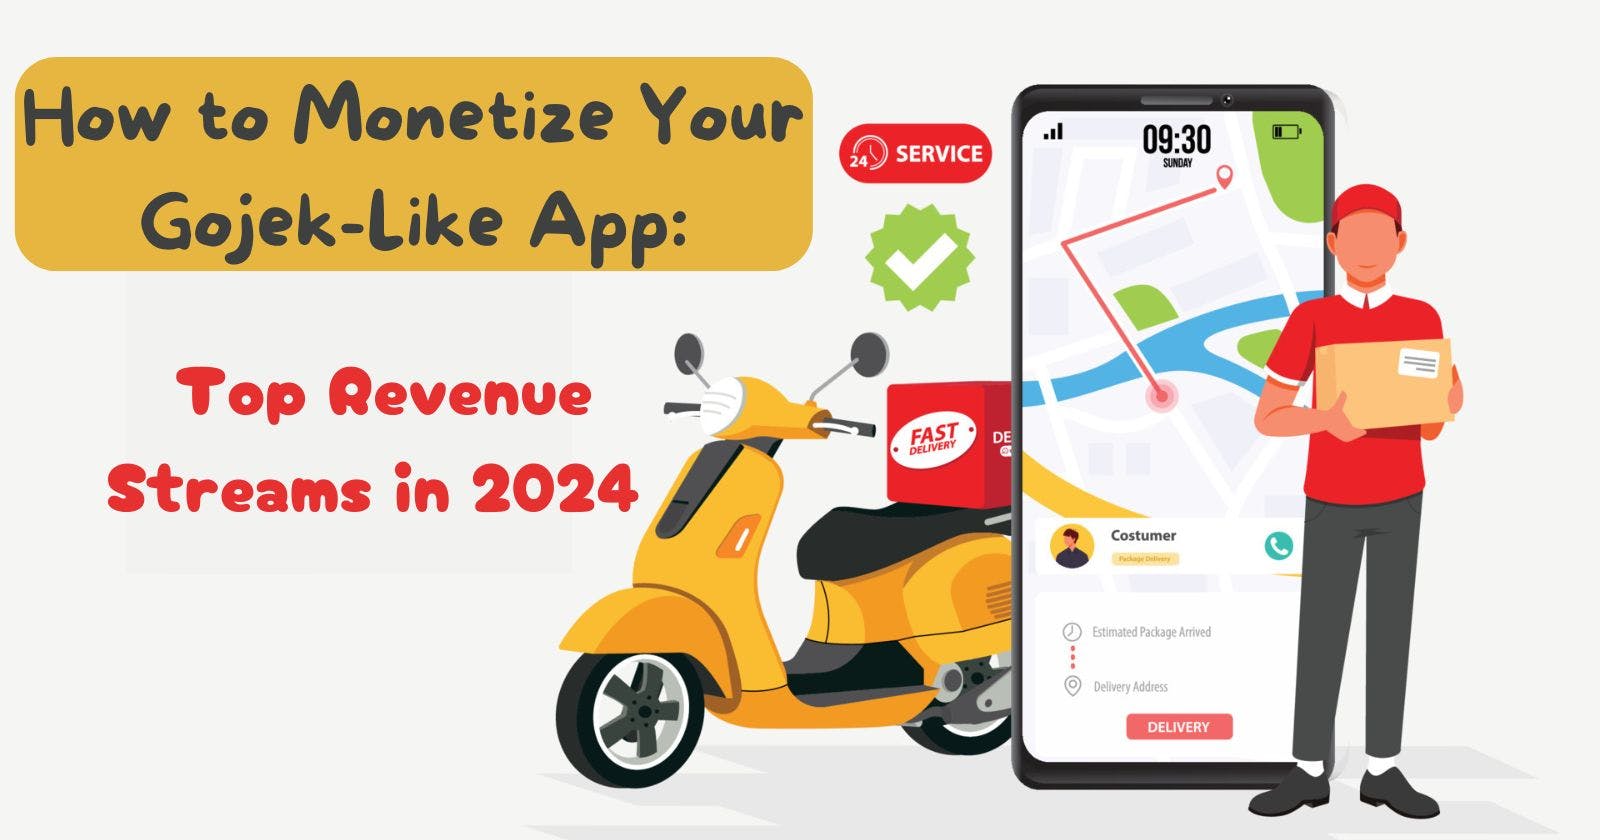 How to Monetize Your Gojek-Like App: Top Revenue Streams in 2024